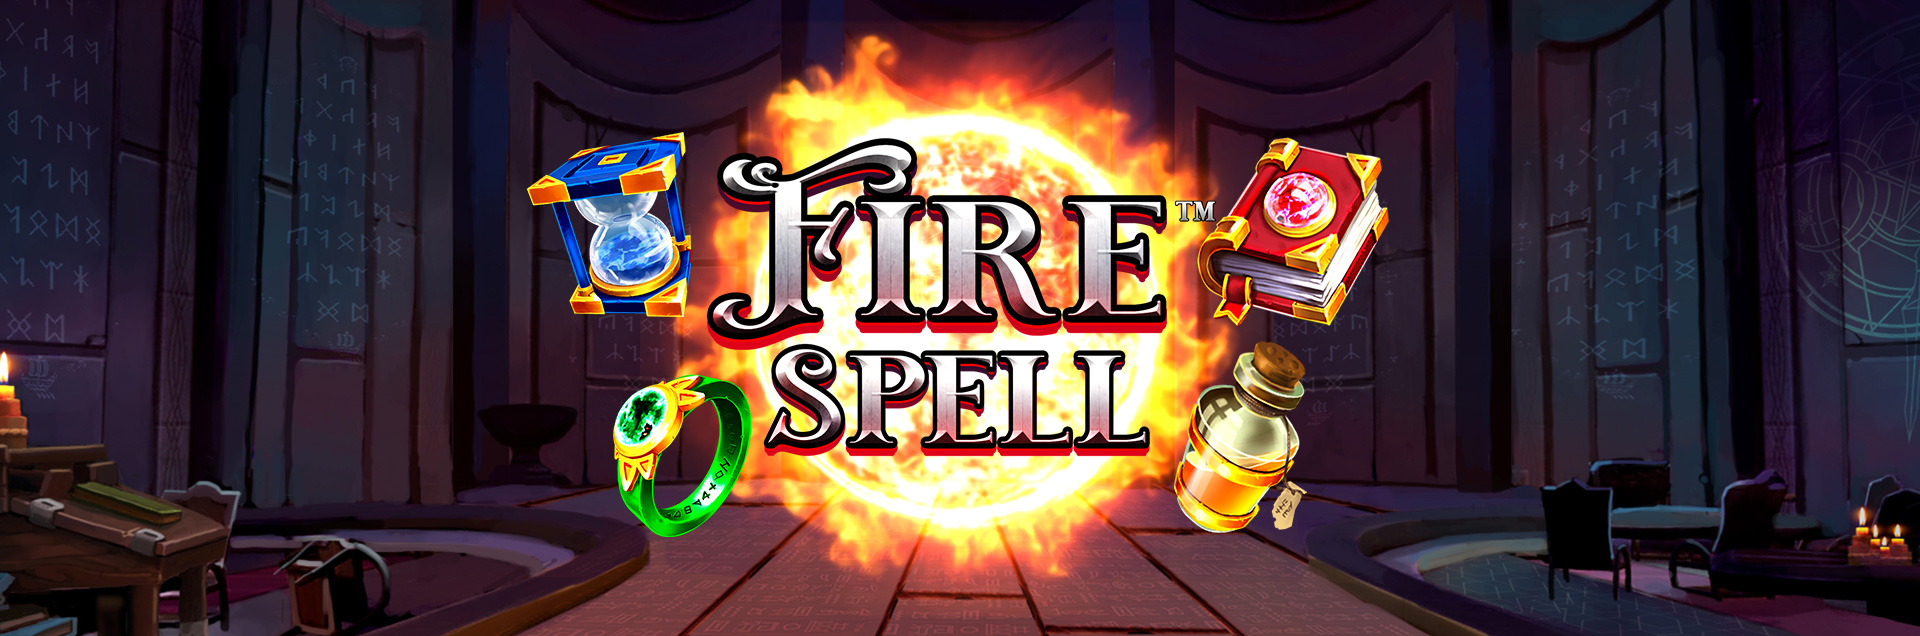 Fire Spell games logo